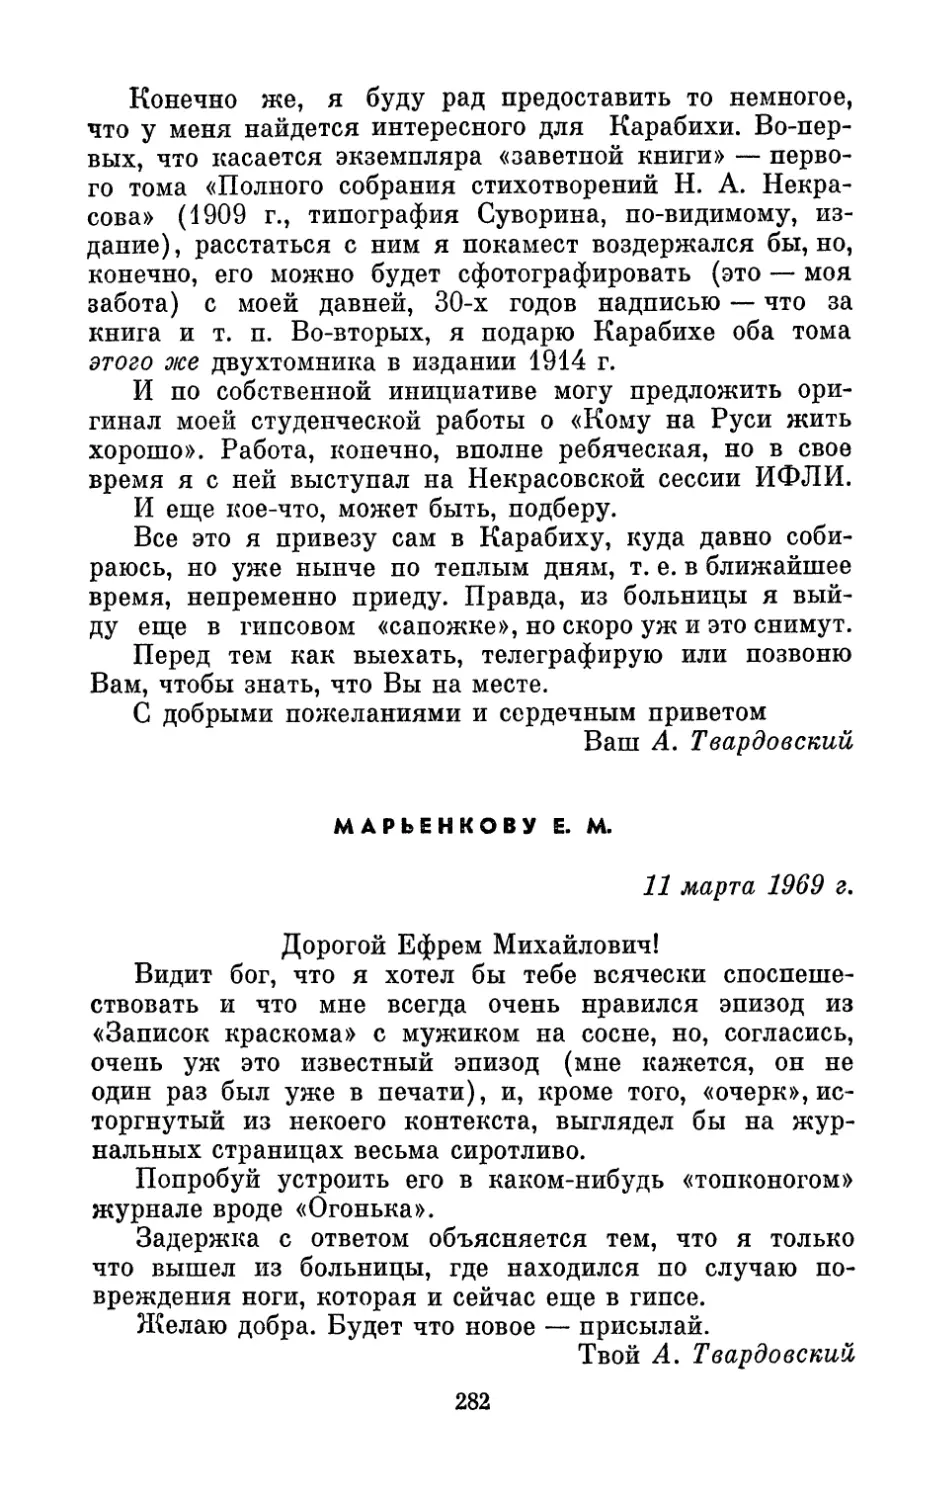 Марьенкову Е. М., 11 марта 1969 г.